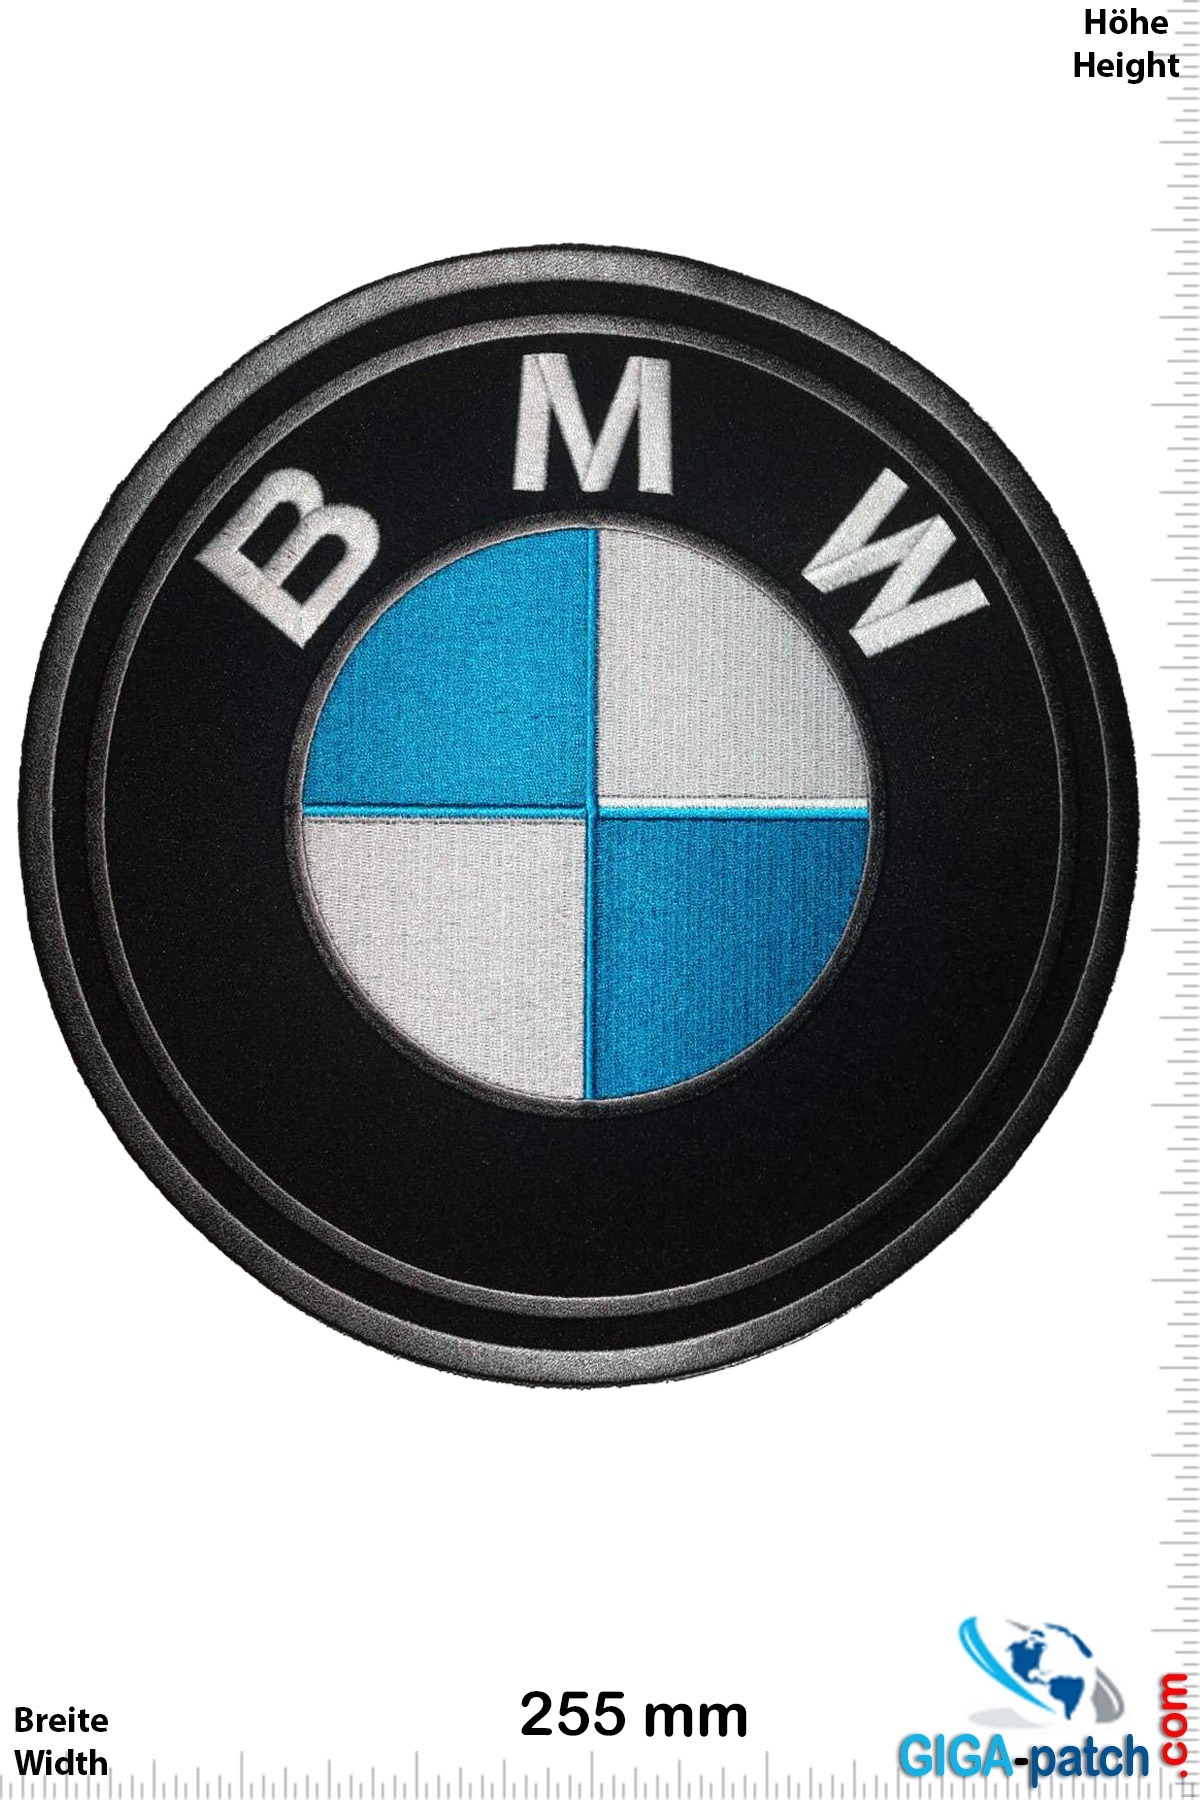 BMW - BMW - round - 25 cm - Patch - Back Patches